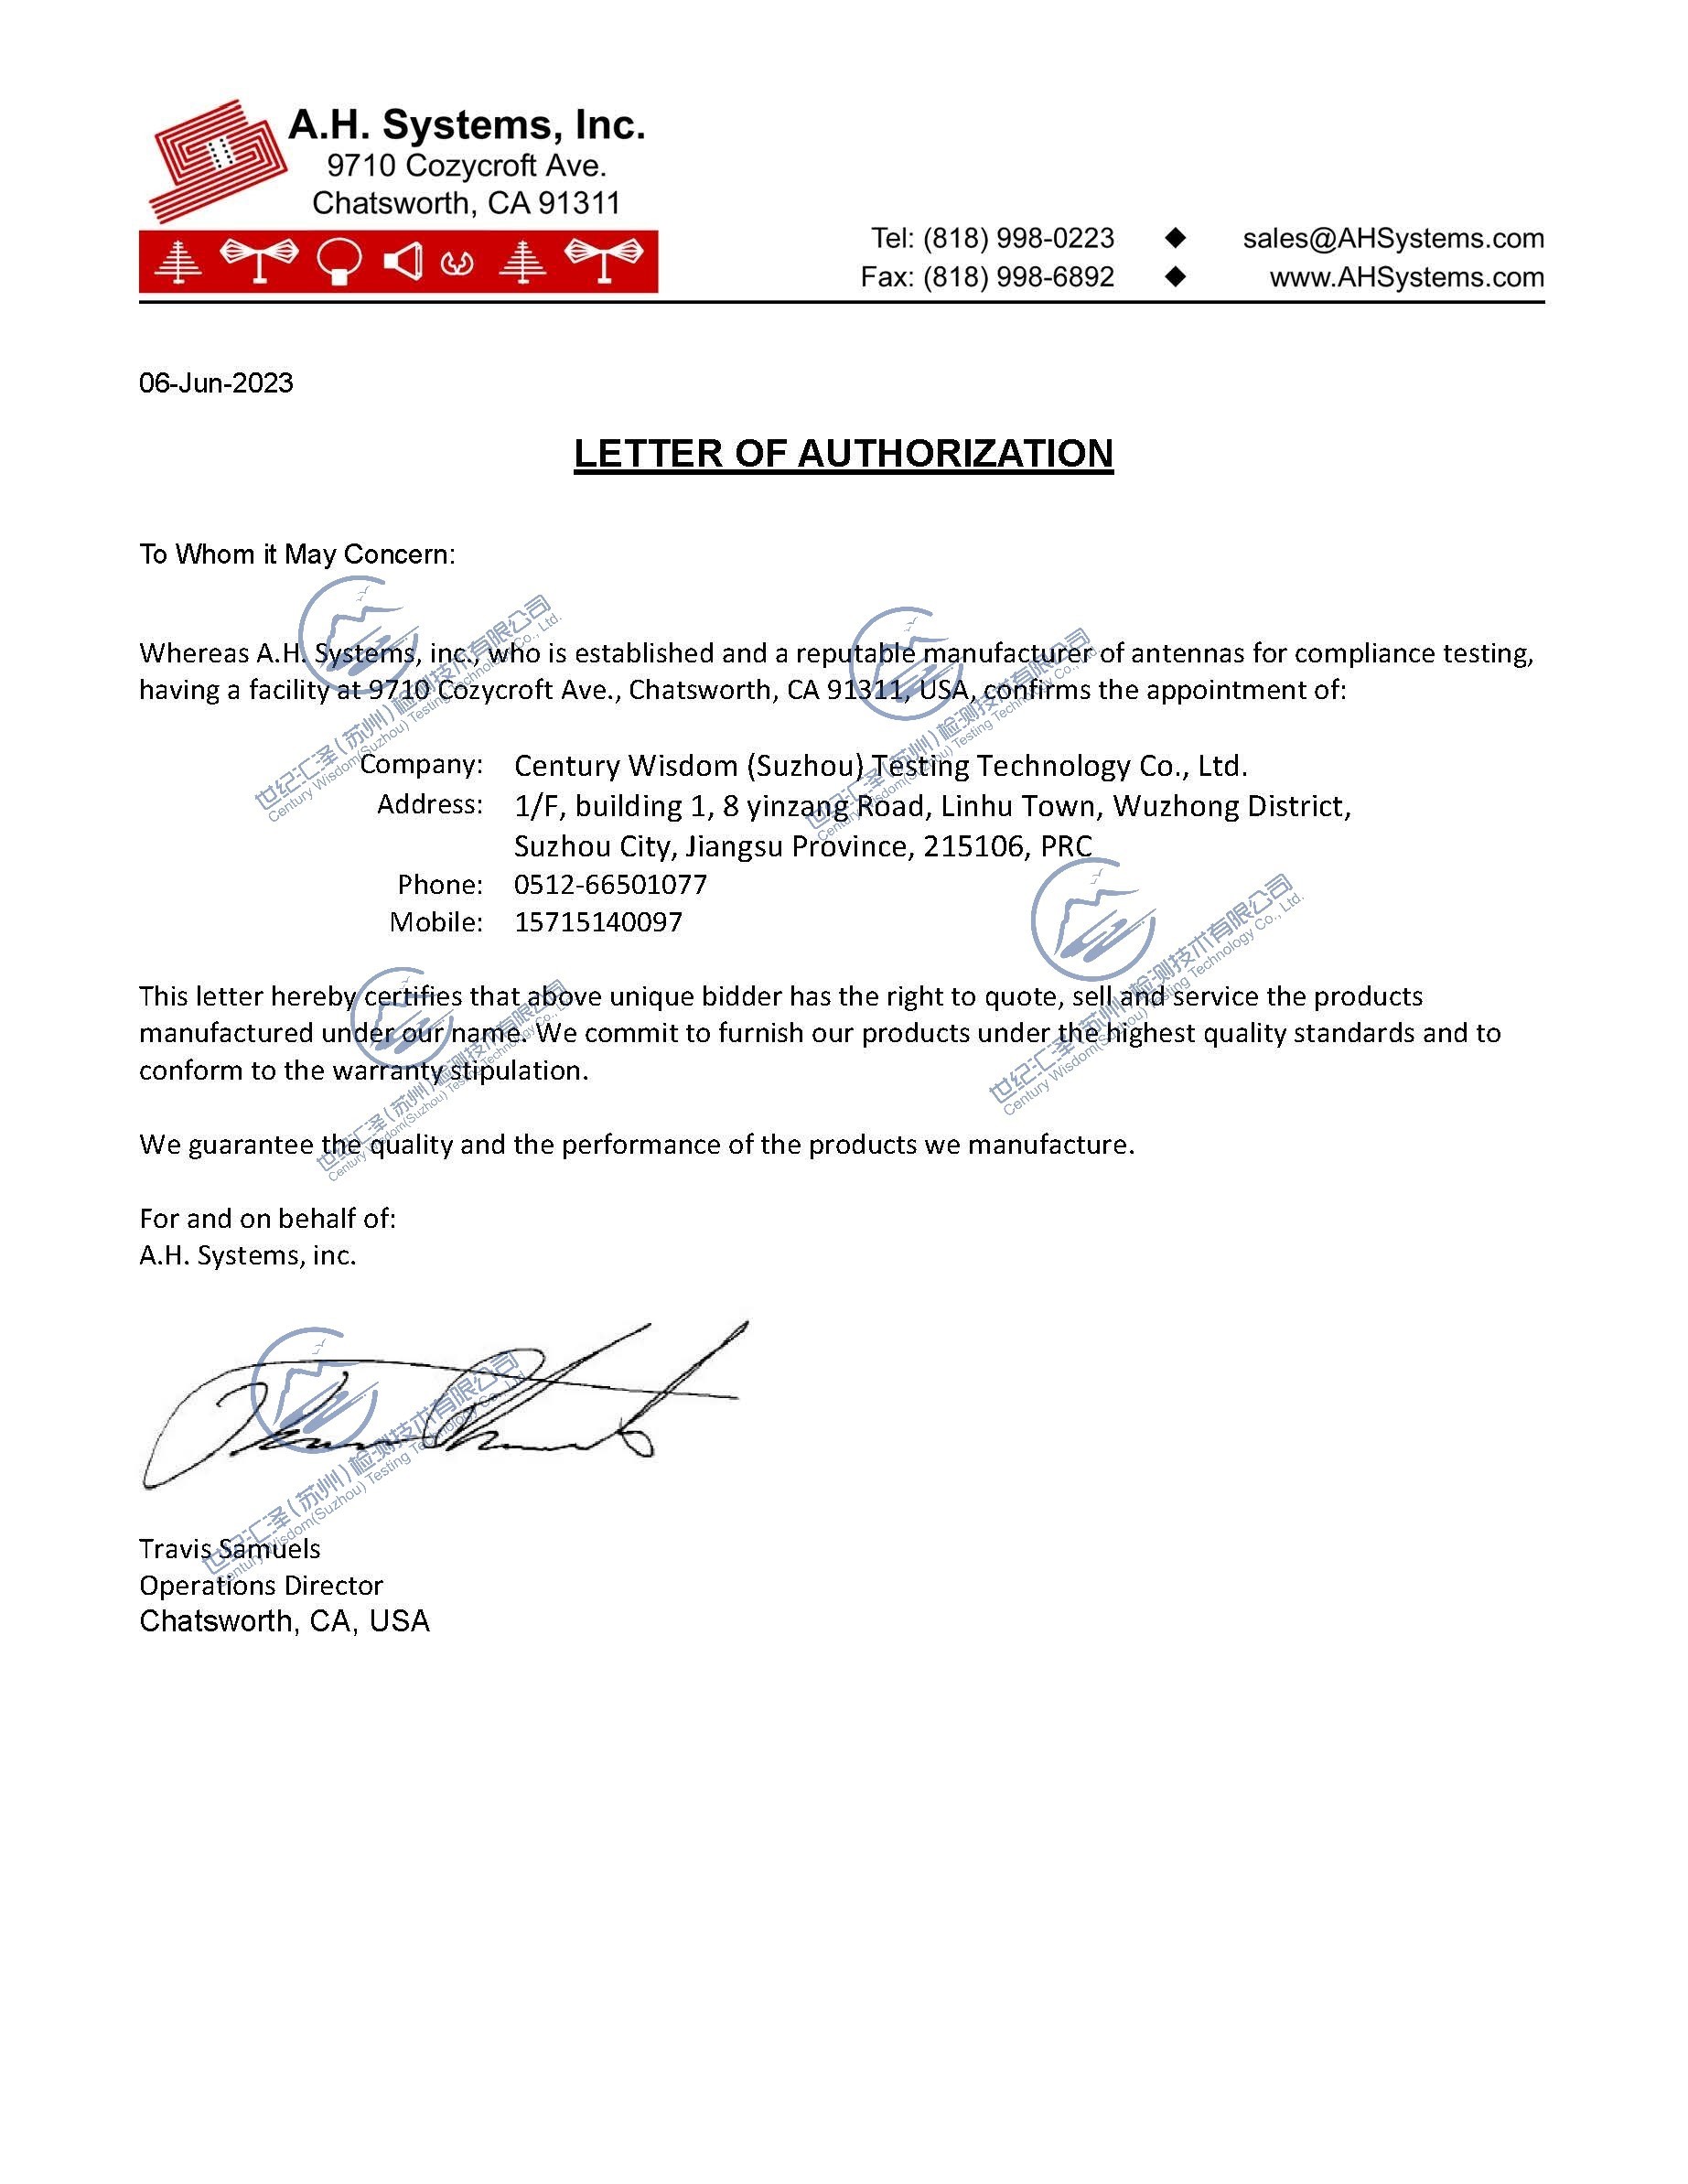 AHS-2023 Manufacturer Authorization